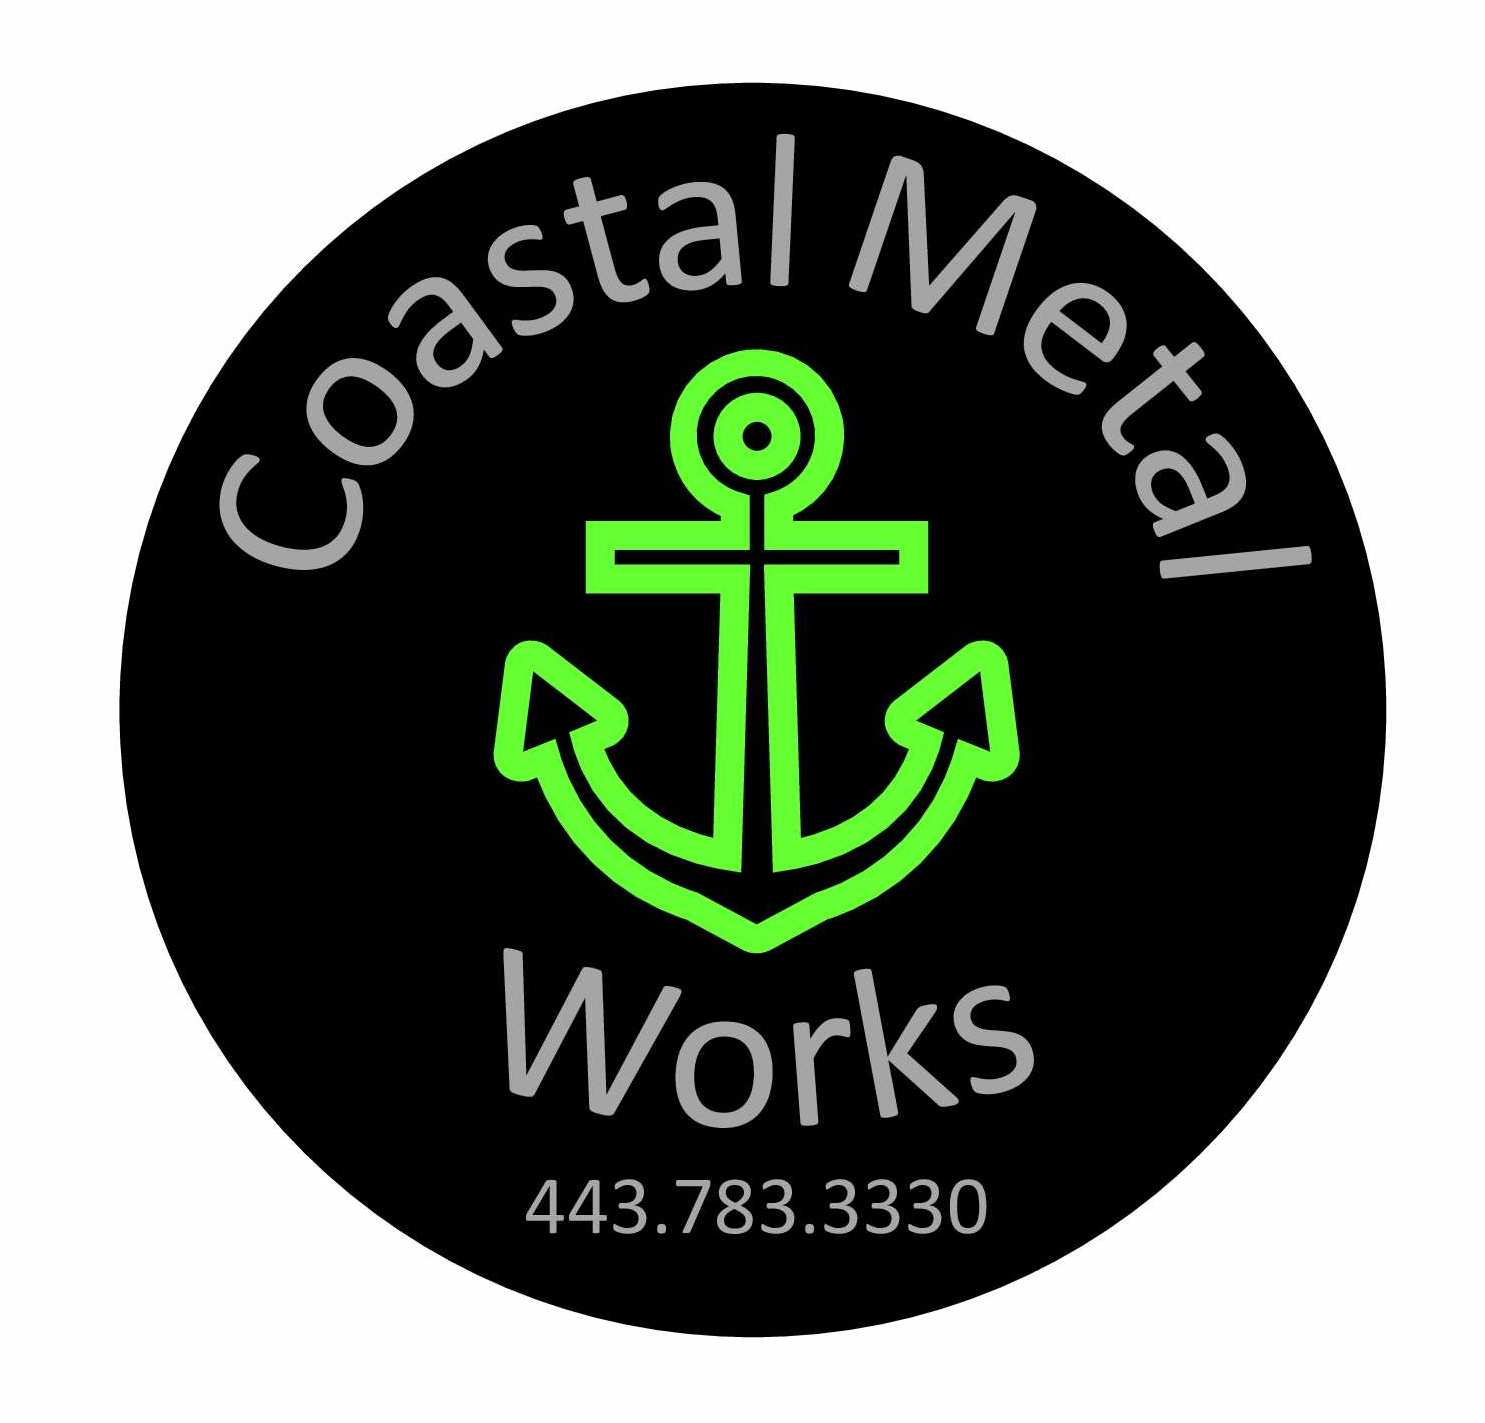 Coastal Metal Works